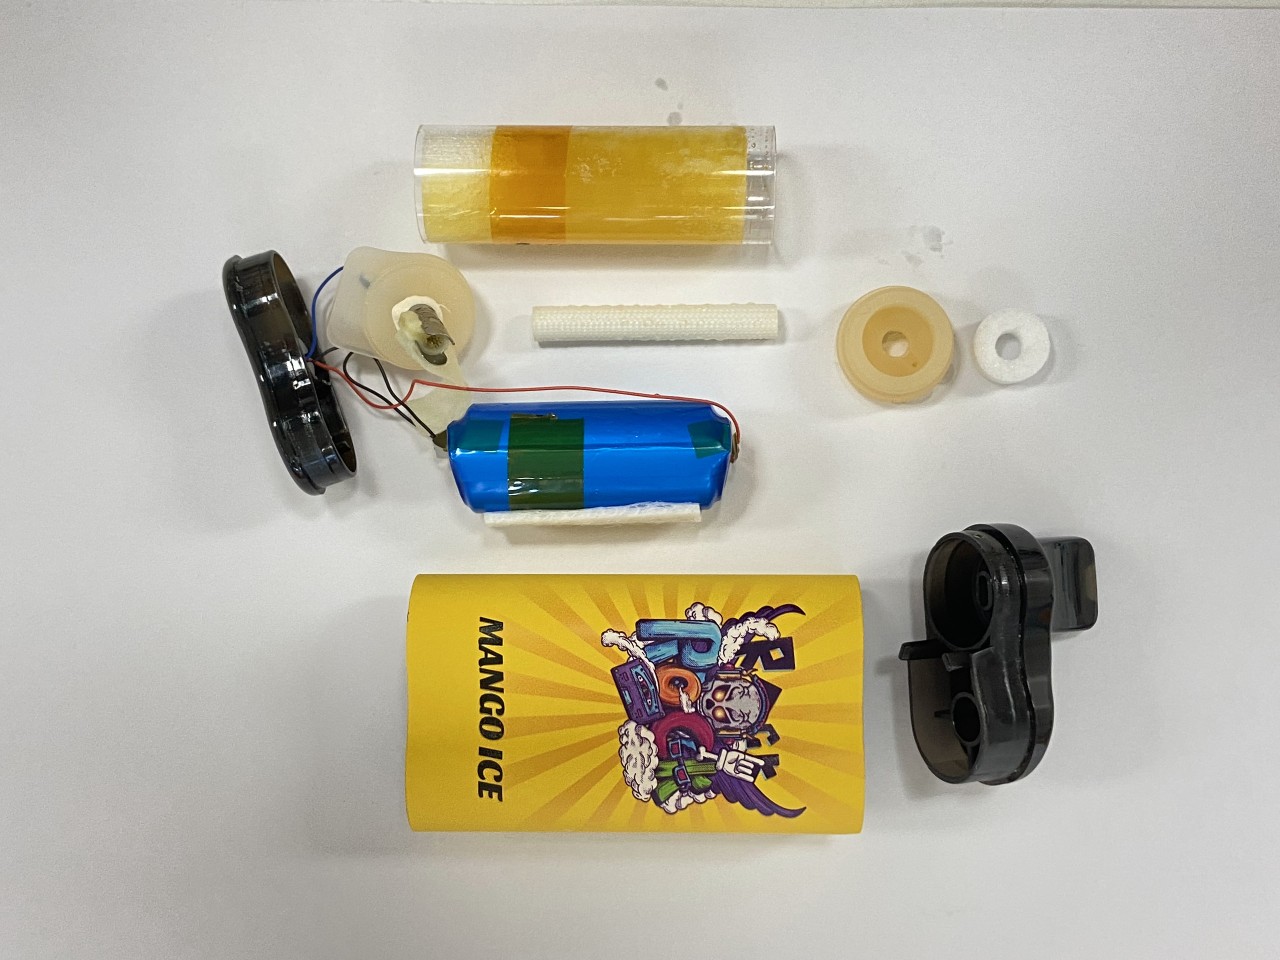 A standard vape taken apart showing battery, mouthpiece, cartridge